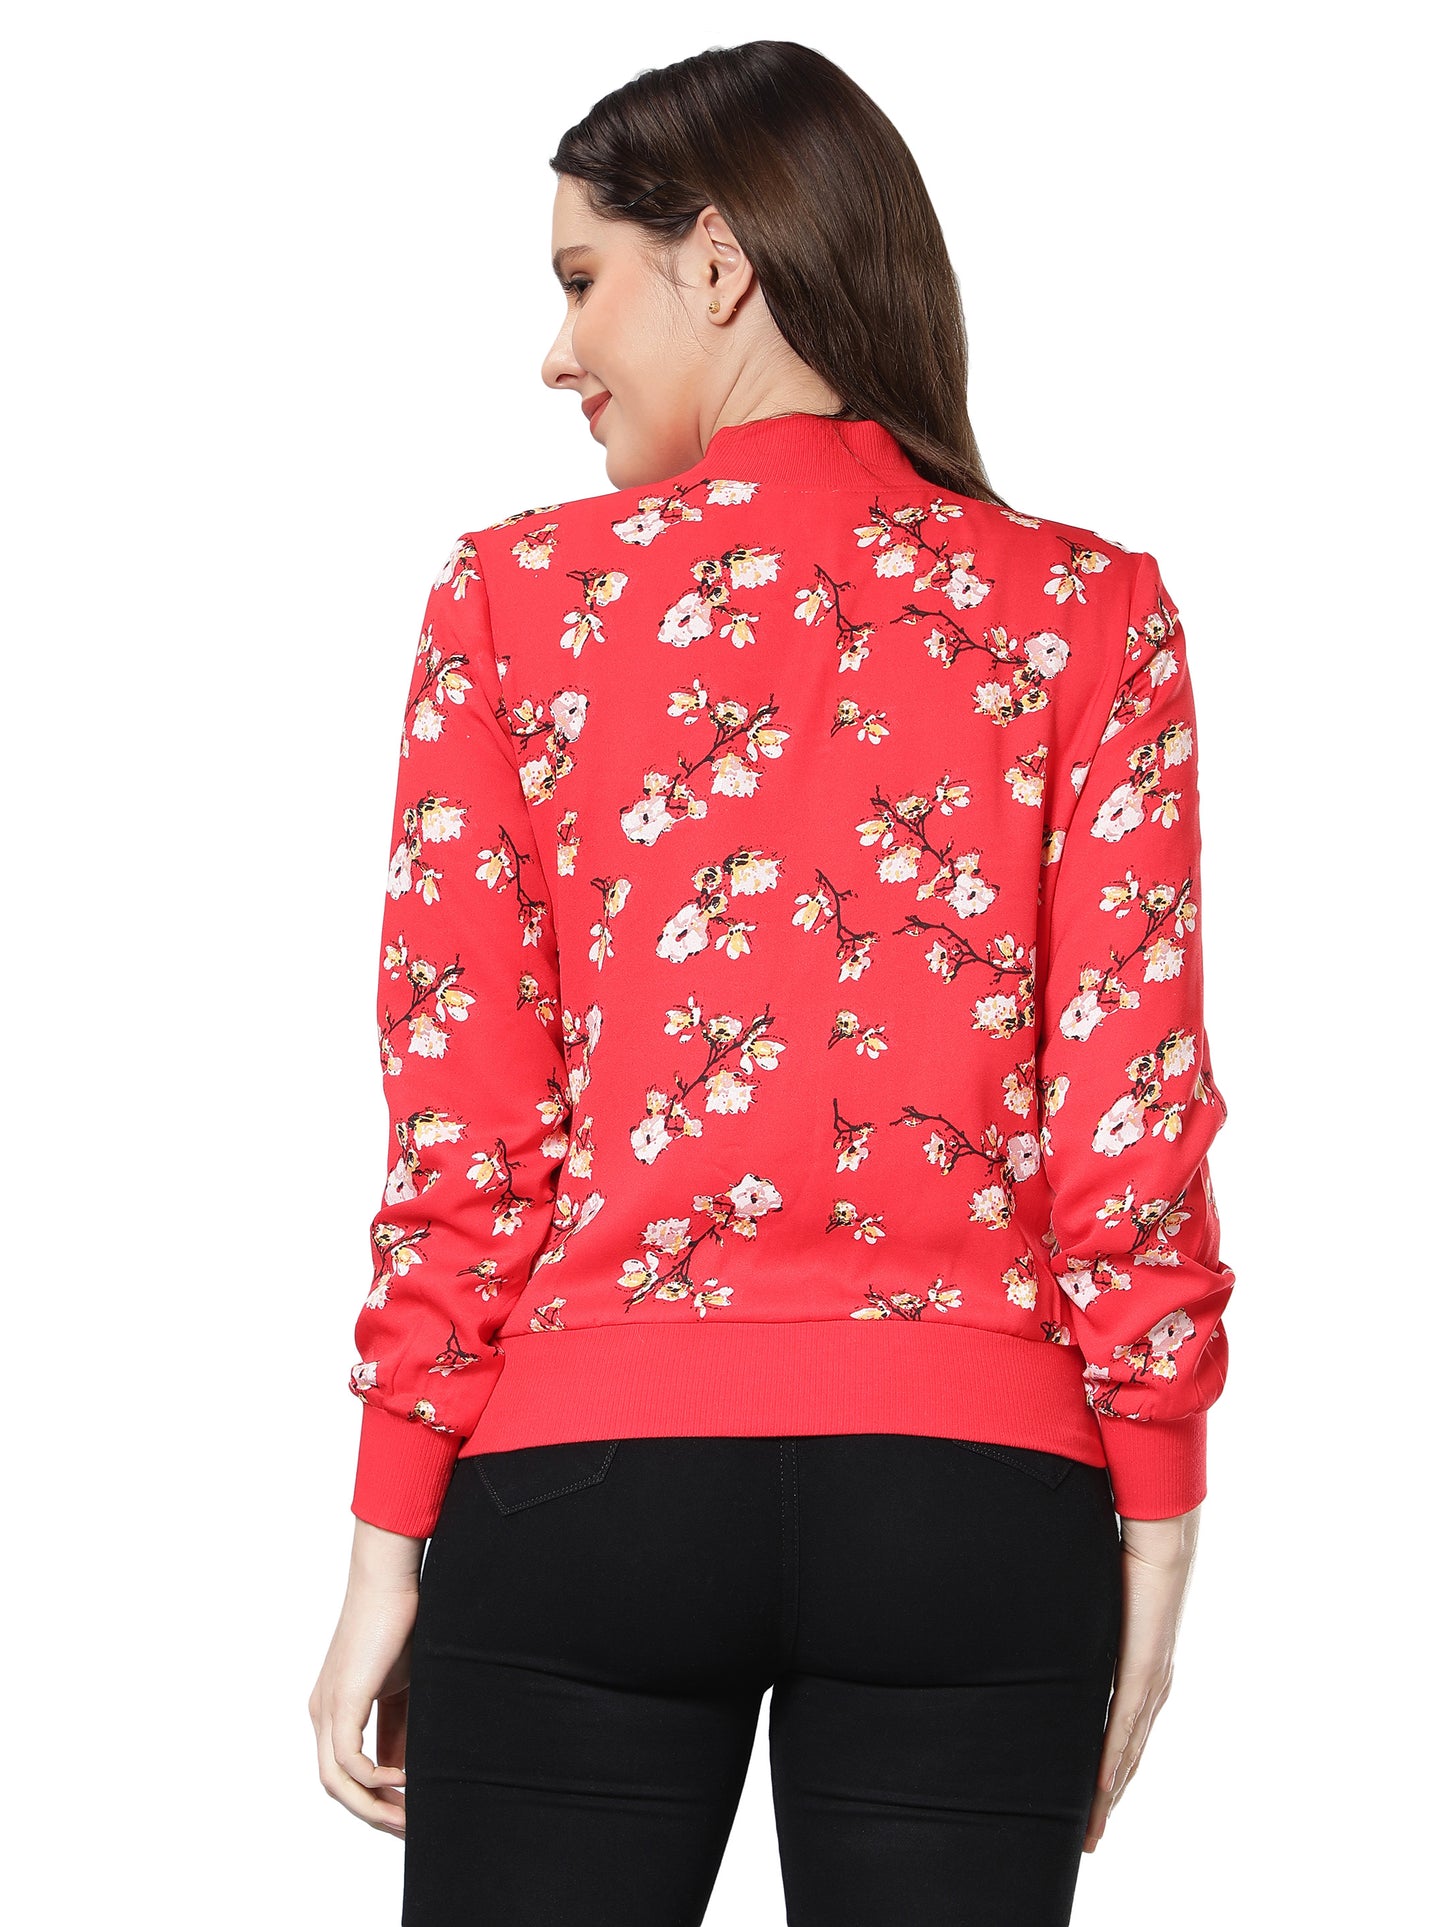 NUEVOSDAMAS Women Floral Printed Red Bomber Jacket